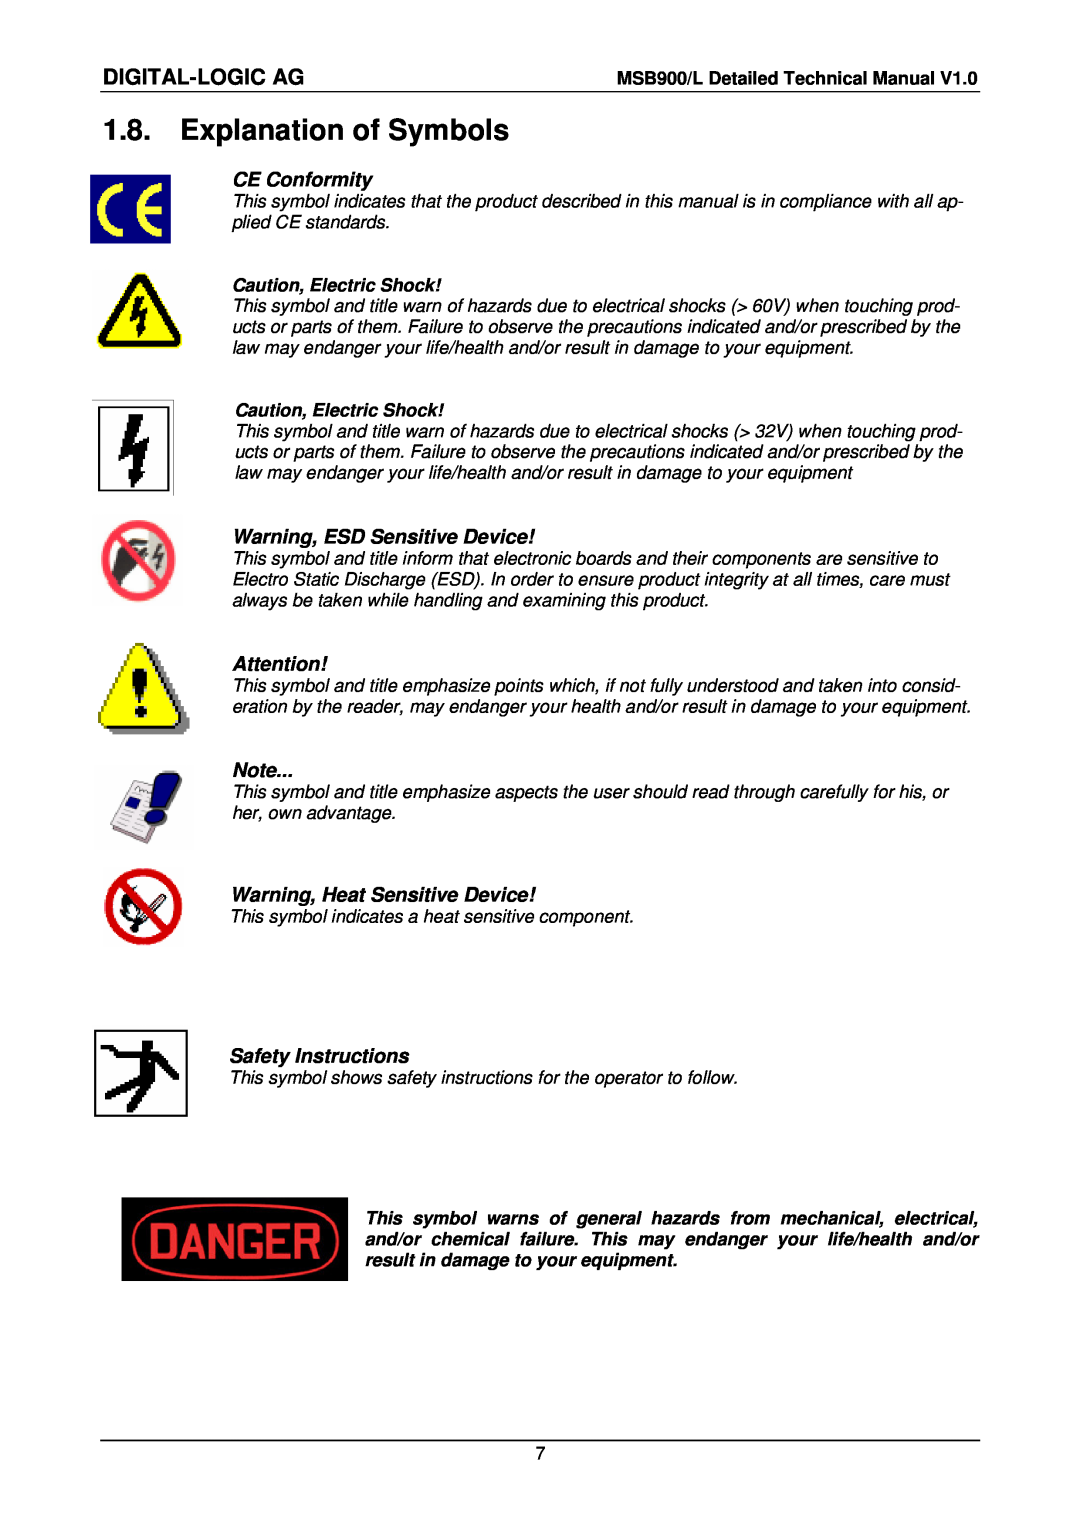 Compaq MSB900 Explanation of Symbols, CE Conformity, Warning, ESD Sensitive Device, Warning, Heat Sensitive Device 